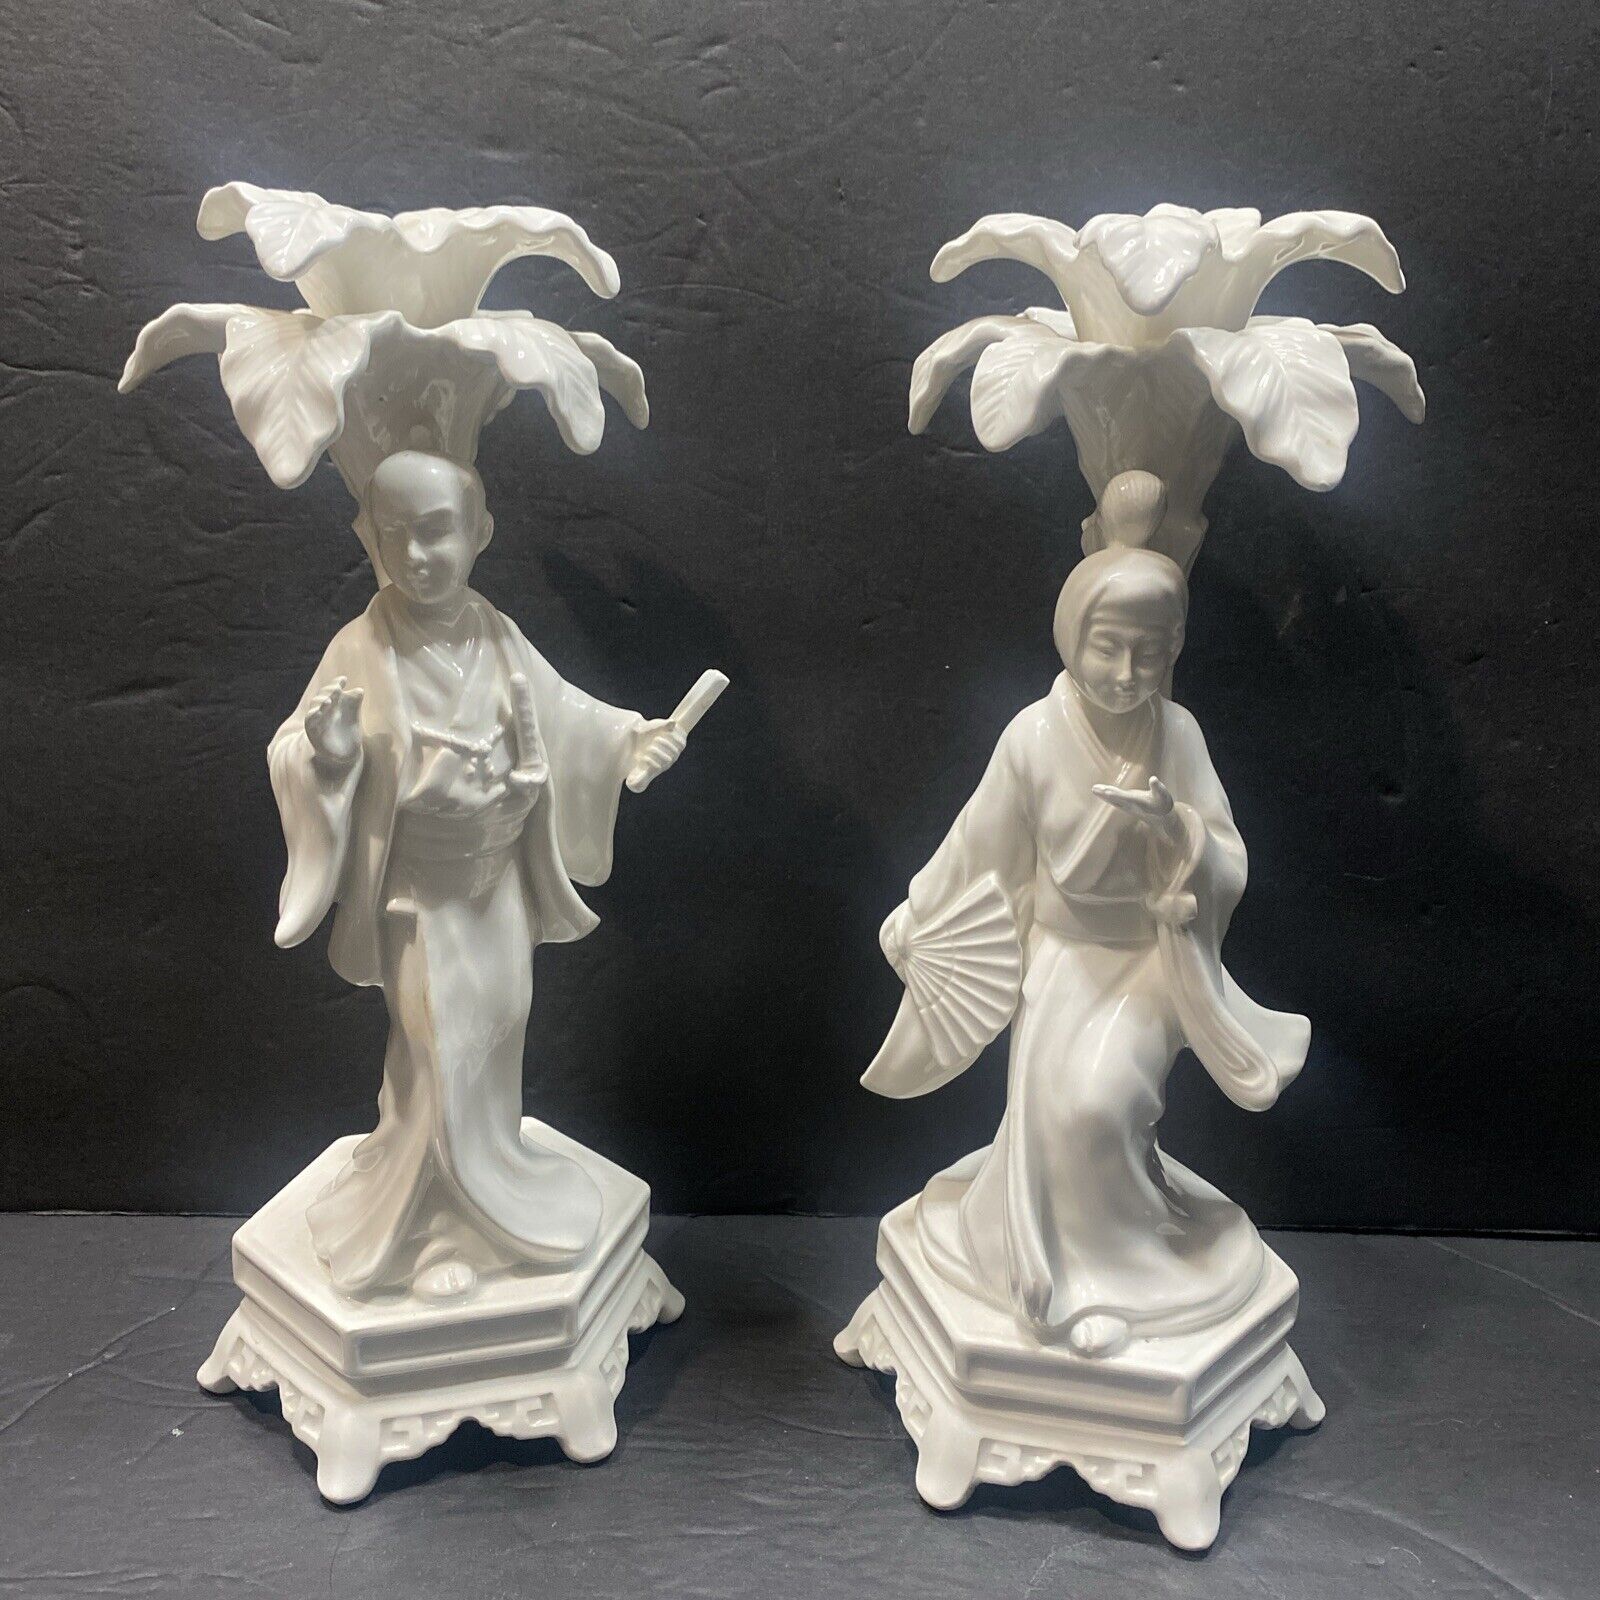 Fitz & Floyd Japanese Figurine Palm trees Ceramic Candlestick Holder - Set of 2